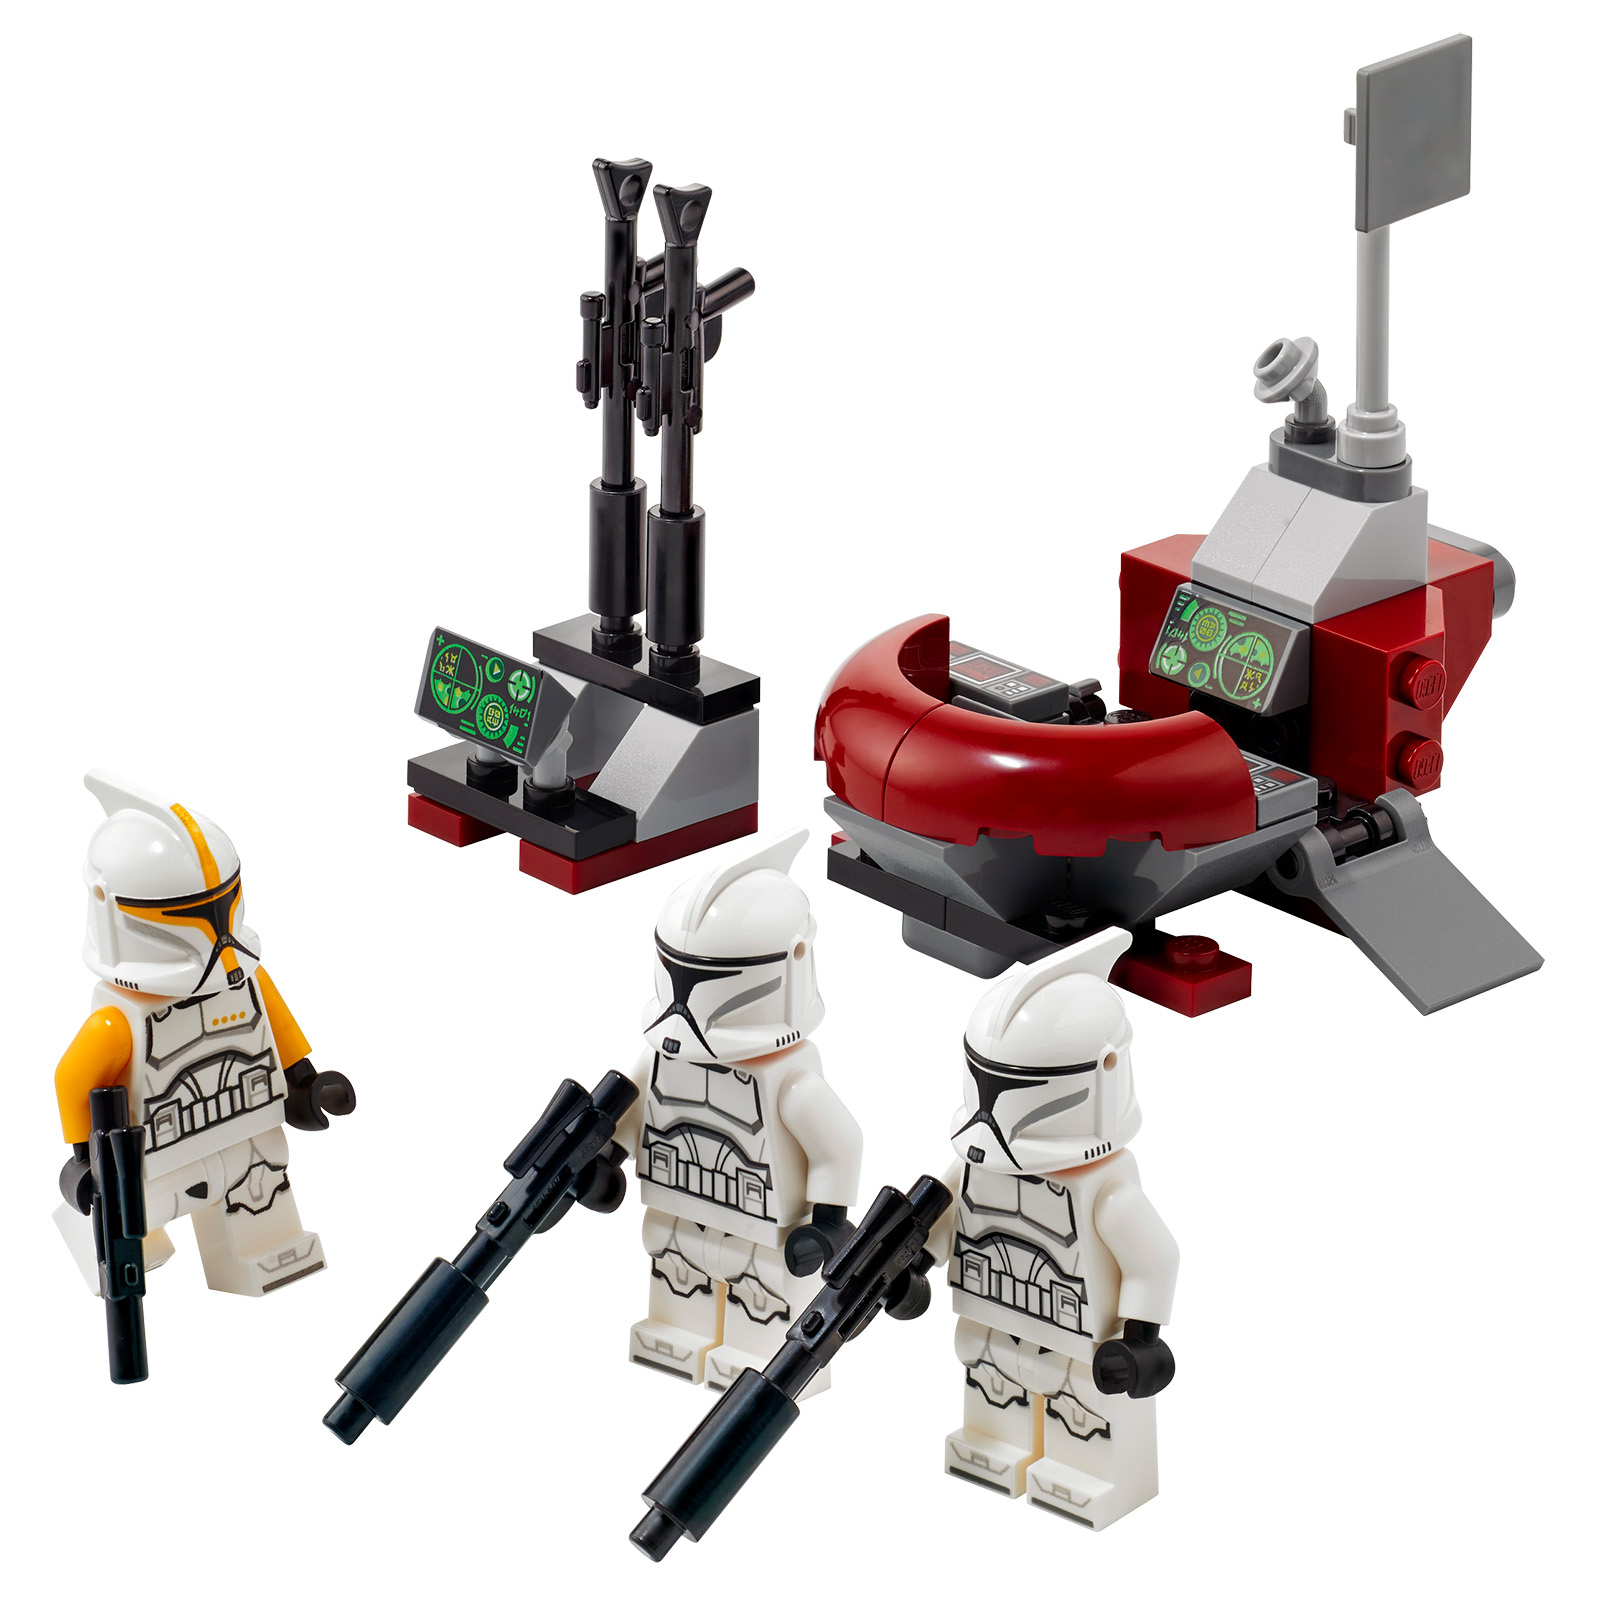 LEGO Star Wars 2022 Accessory Packs Revealed